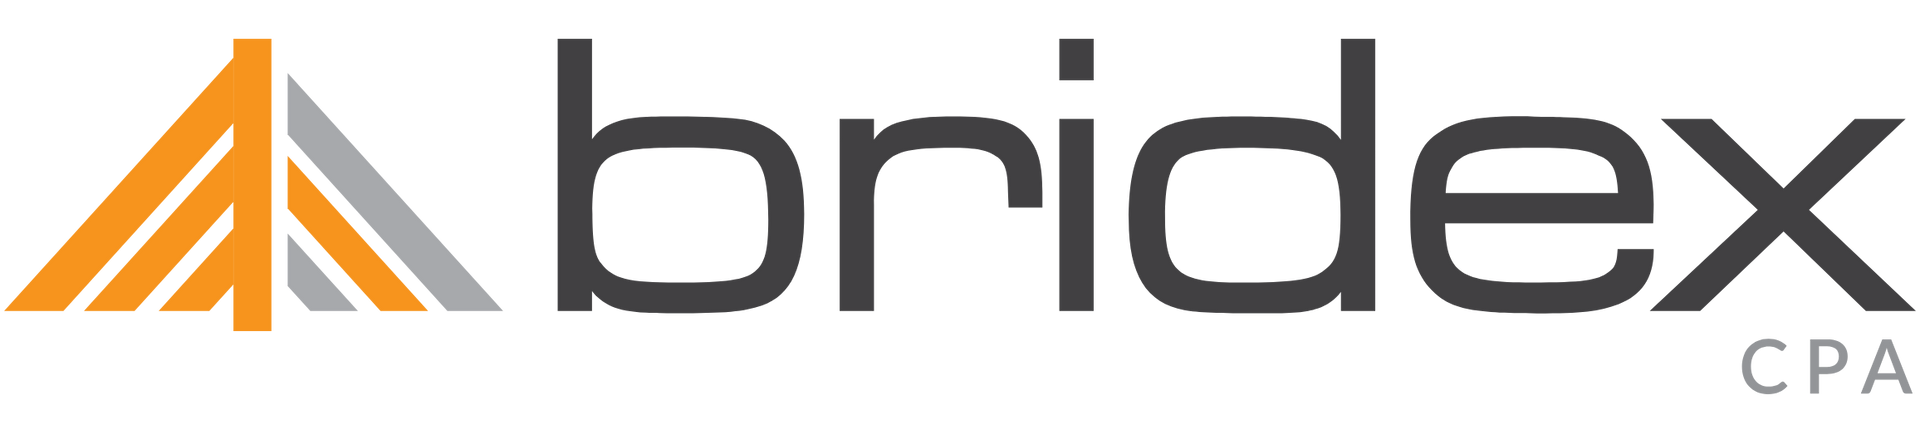 Bridex chartered professional accountant logo.